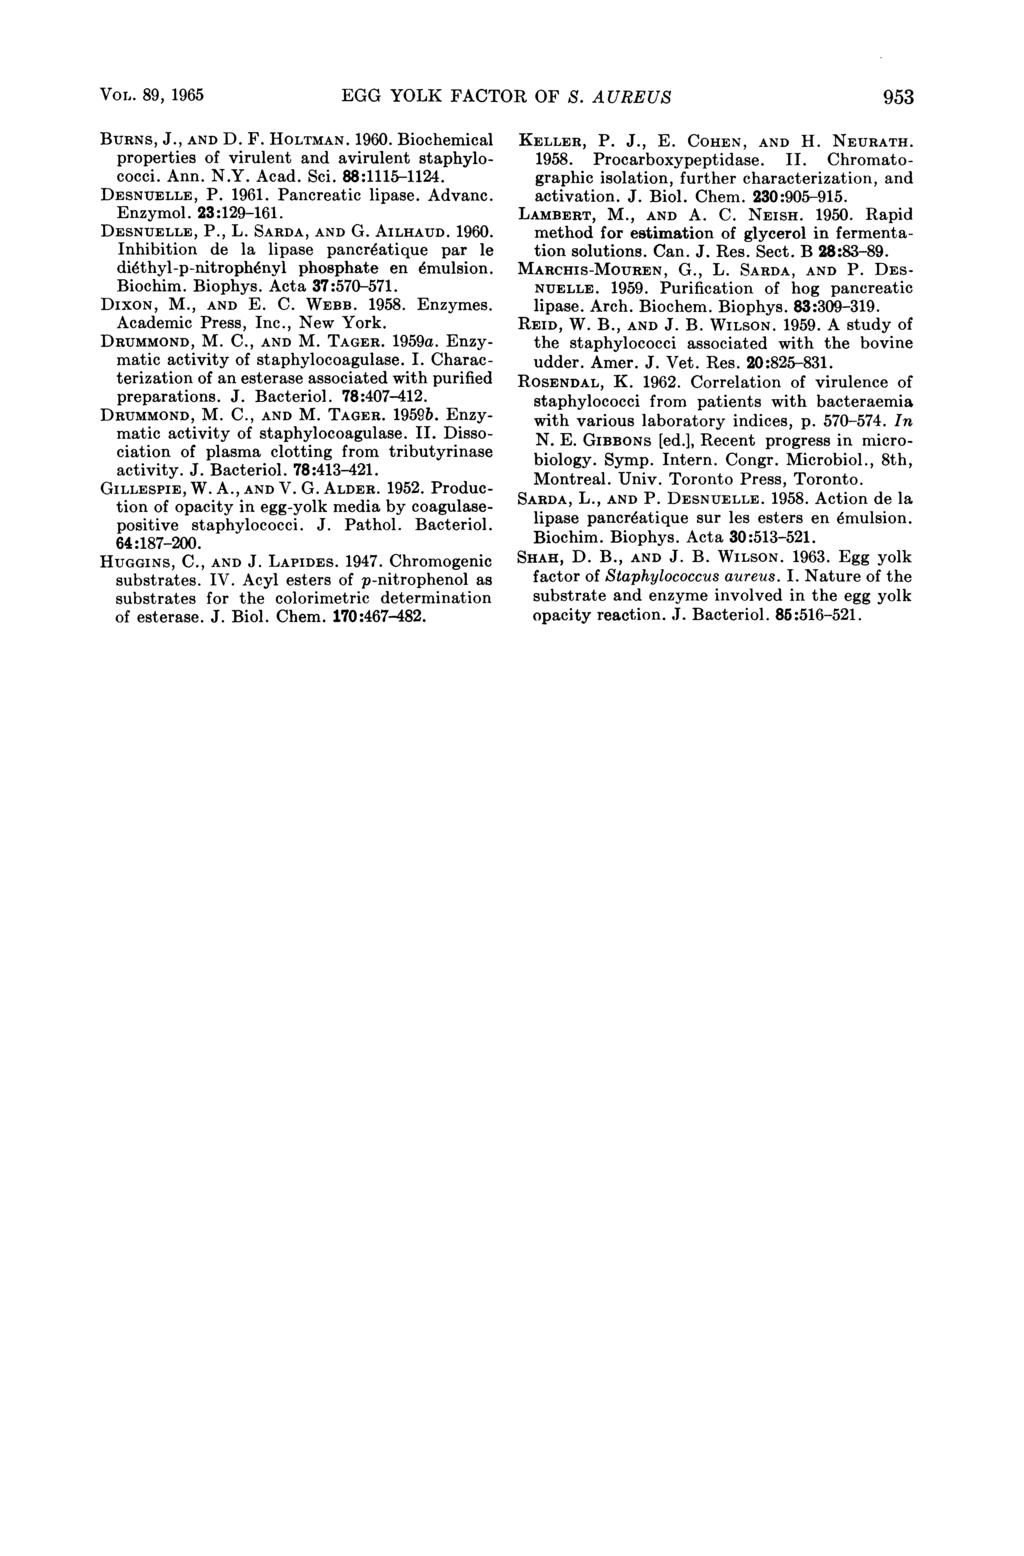 VOL. 89, 1965 EGG YOLK FACTOR OF S. AUREUS 953 BURNS, J., AND D. F. HOLTMAN. 196. Biochemical properties of virulent and avirulent staphylococci. Ann. N.Y. Acad. Sci. 88:1115-1124. DESNUELLE, P. 1961.